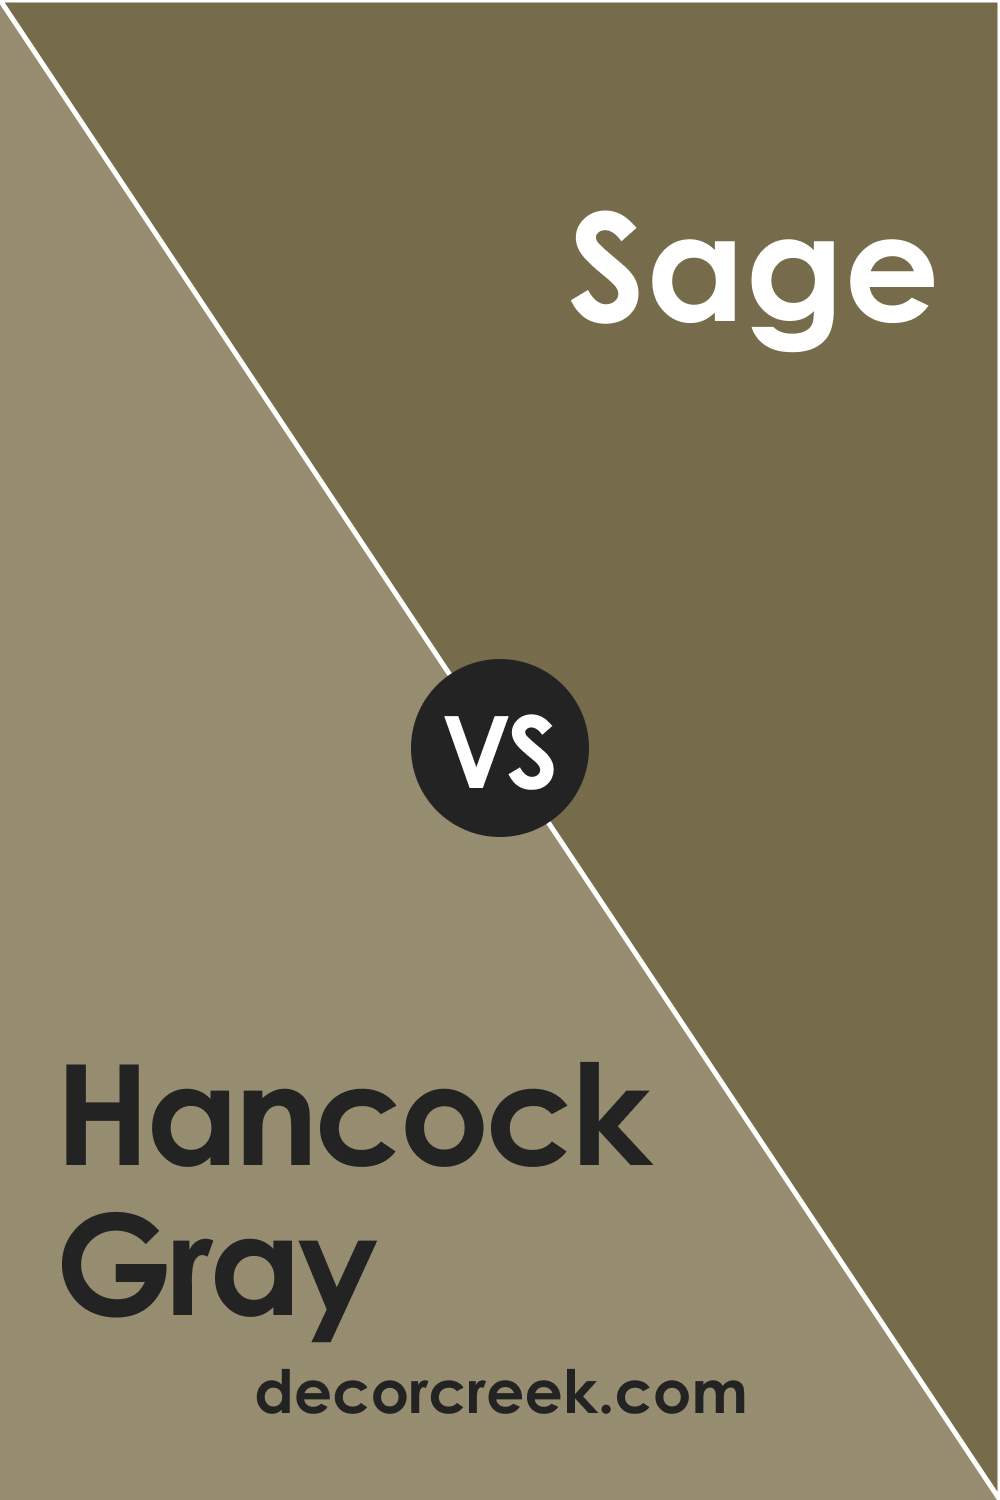 Hancock Gray HC-97 vs. BM 2143-10 Sage